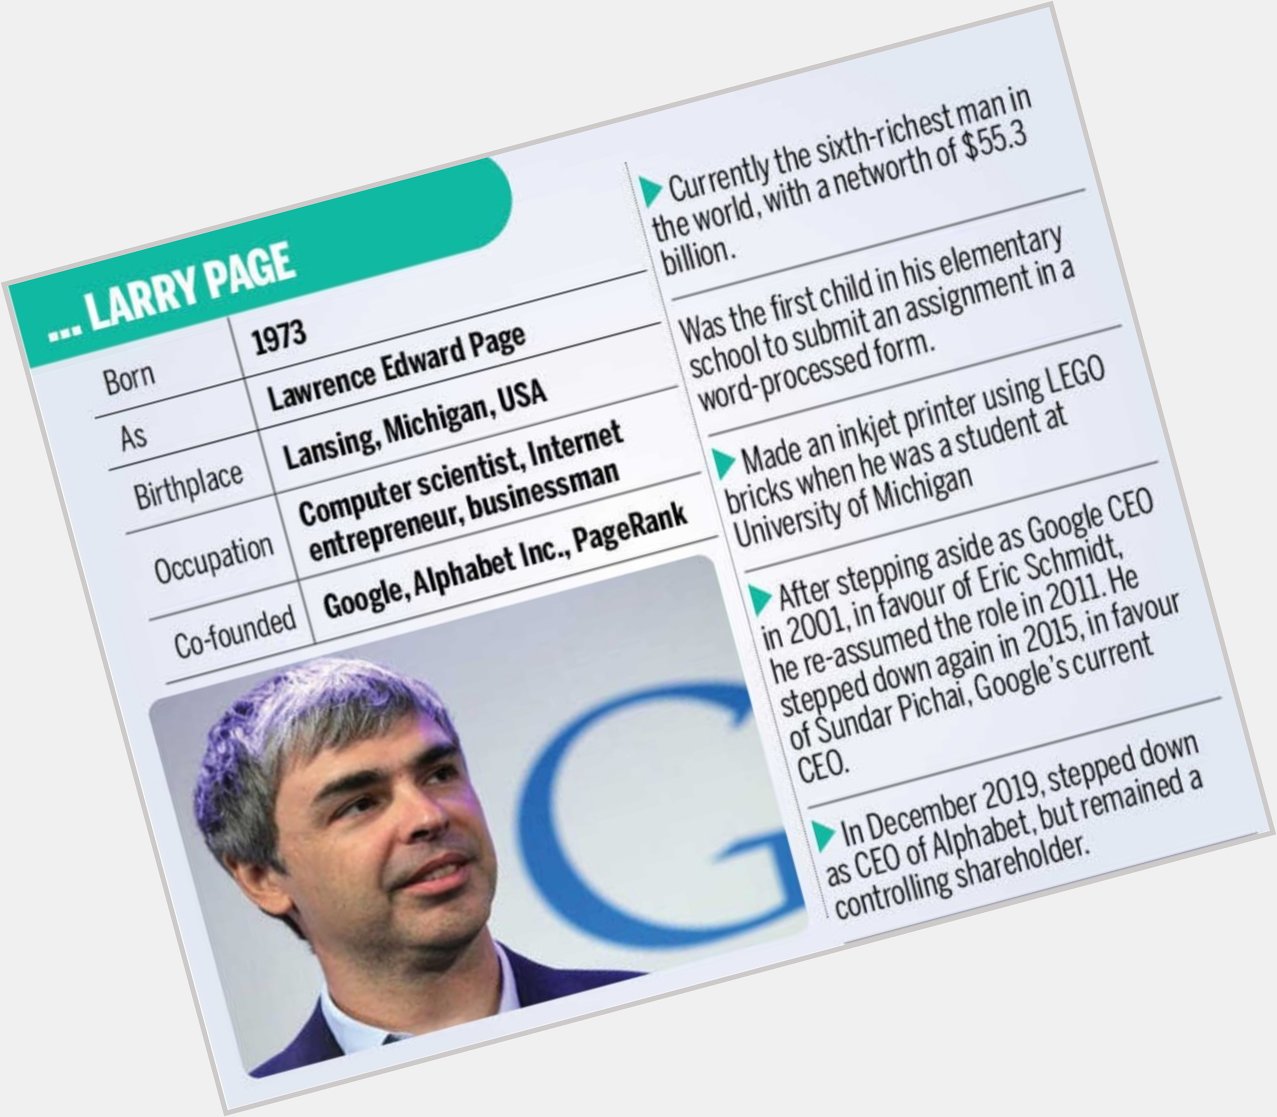 Happy Birthday Larry Page
via   